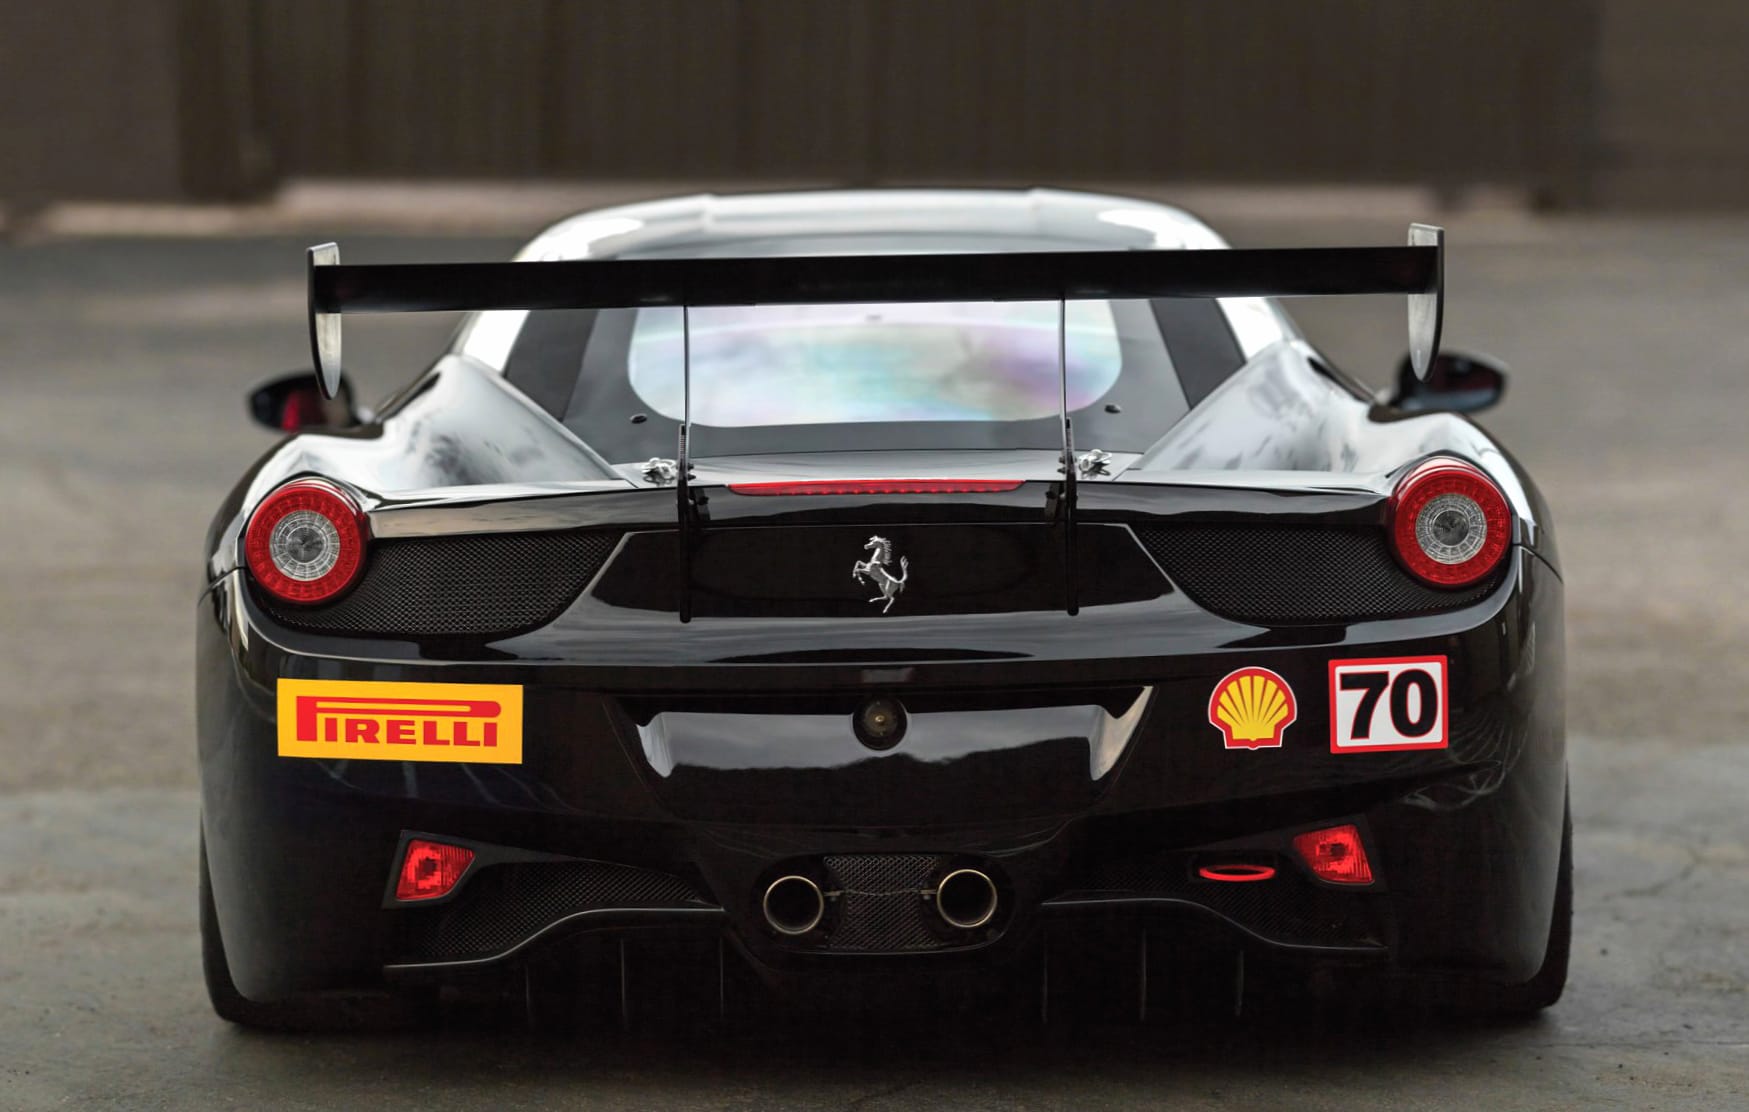 Ferrari 458 Challenge Evoluzione at 1024 x 768 size wallpapers HD quality